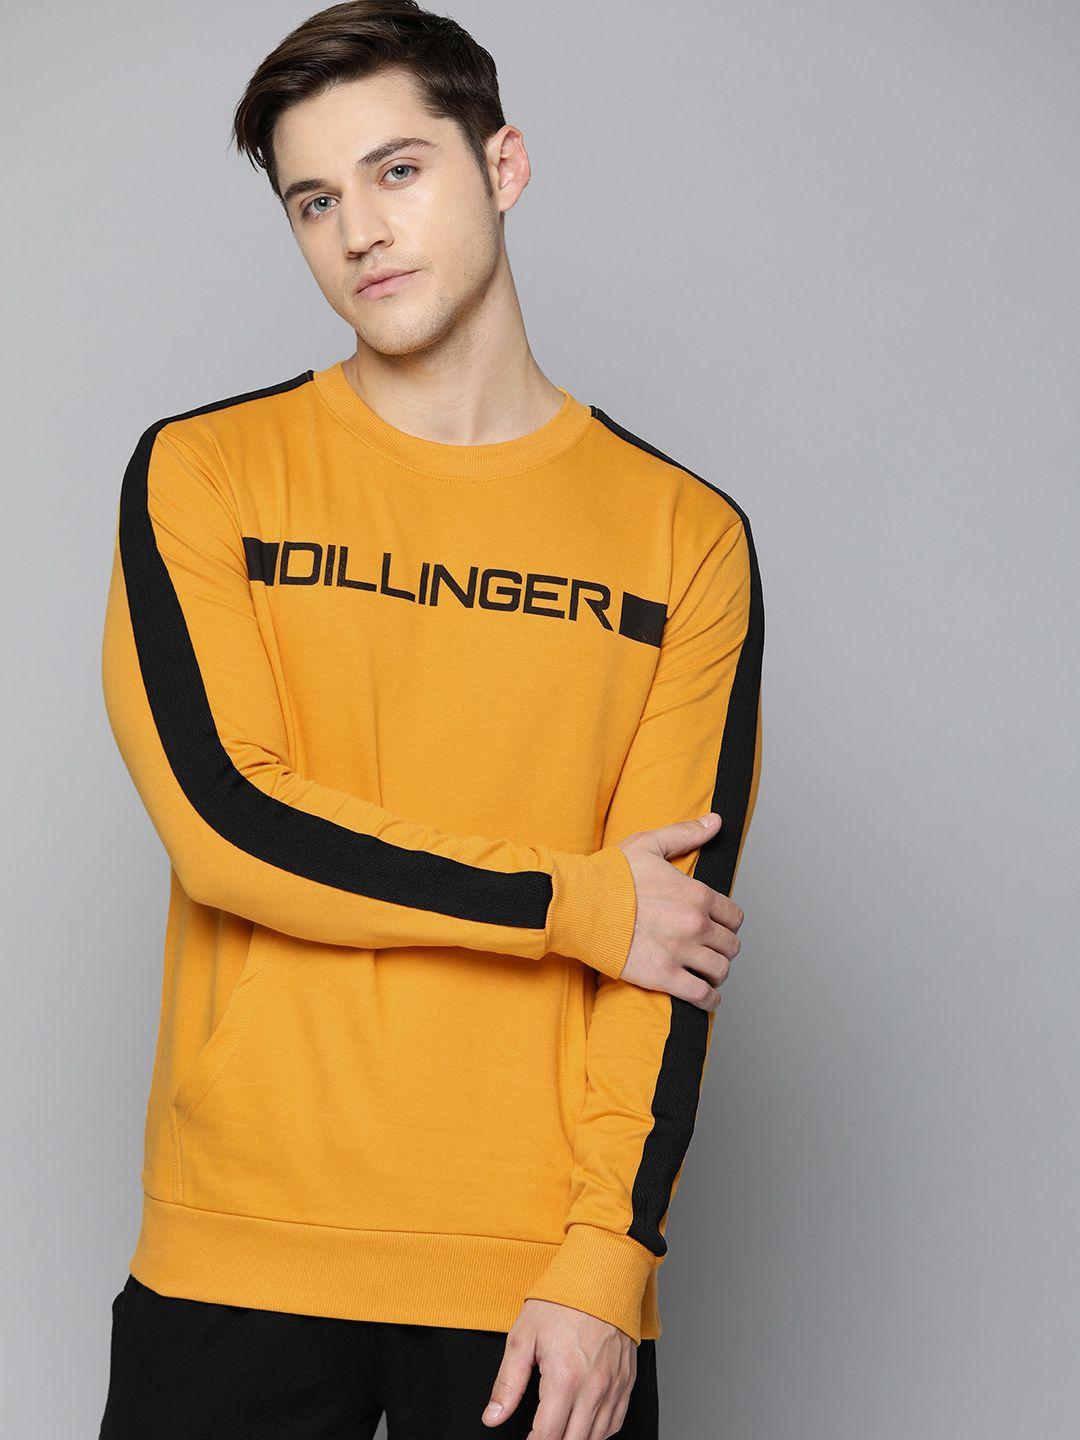 dillinger-men-mustard-yellow-printed-sweatshirt